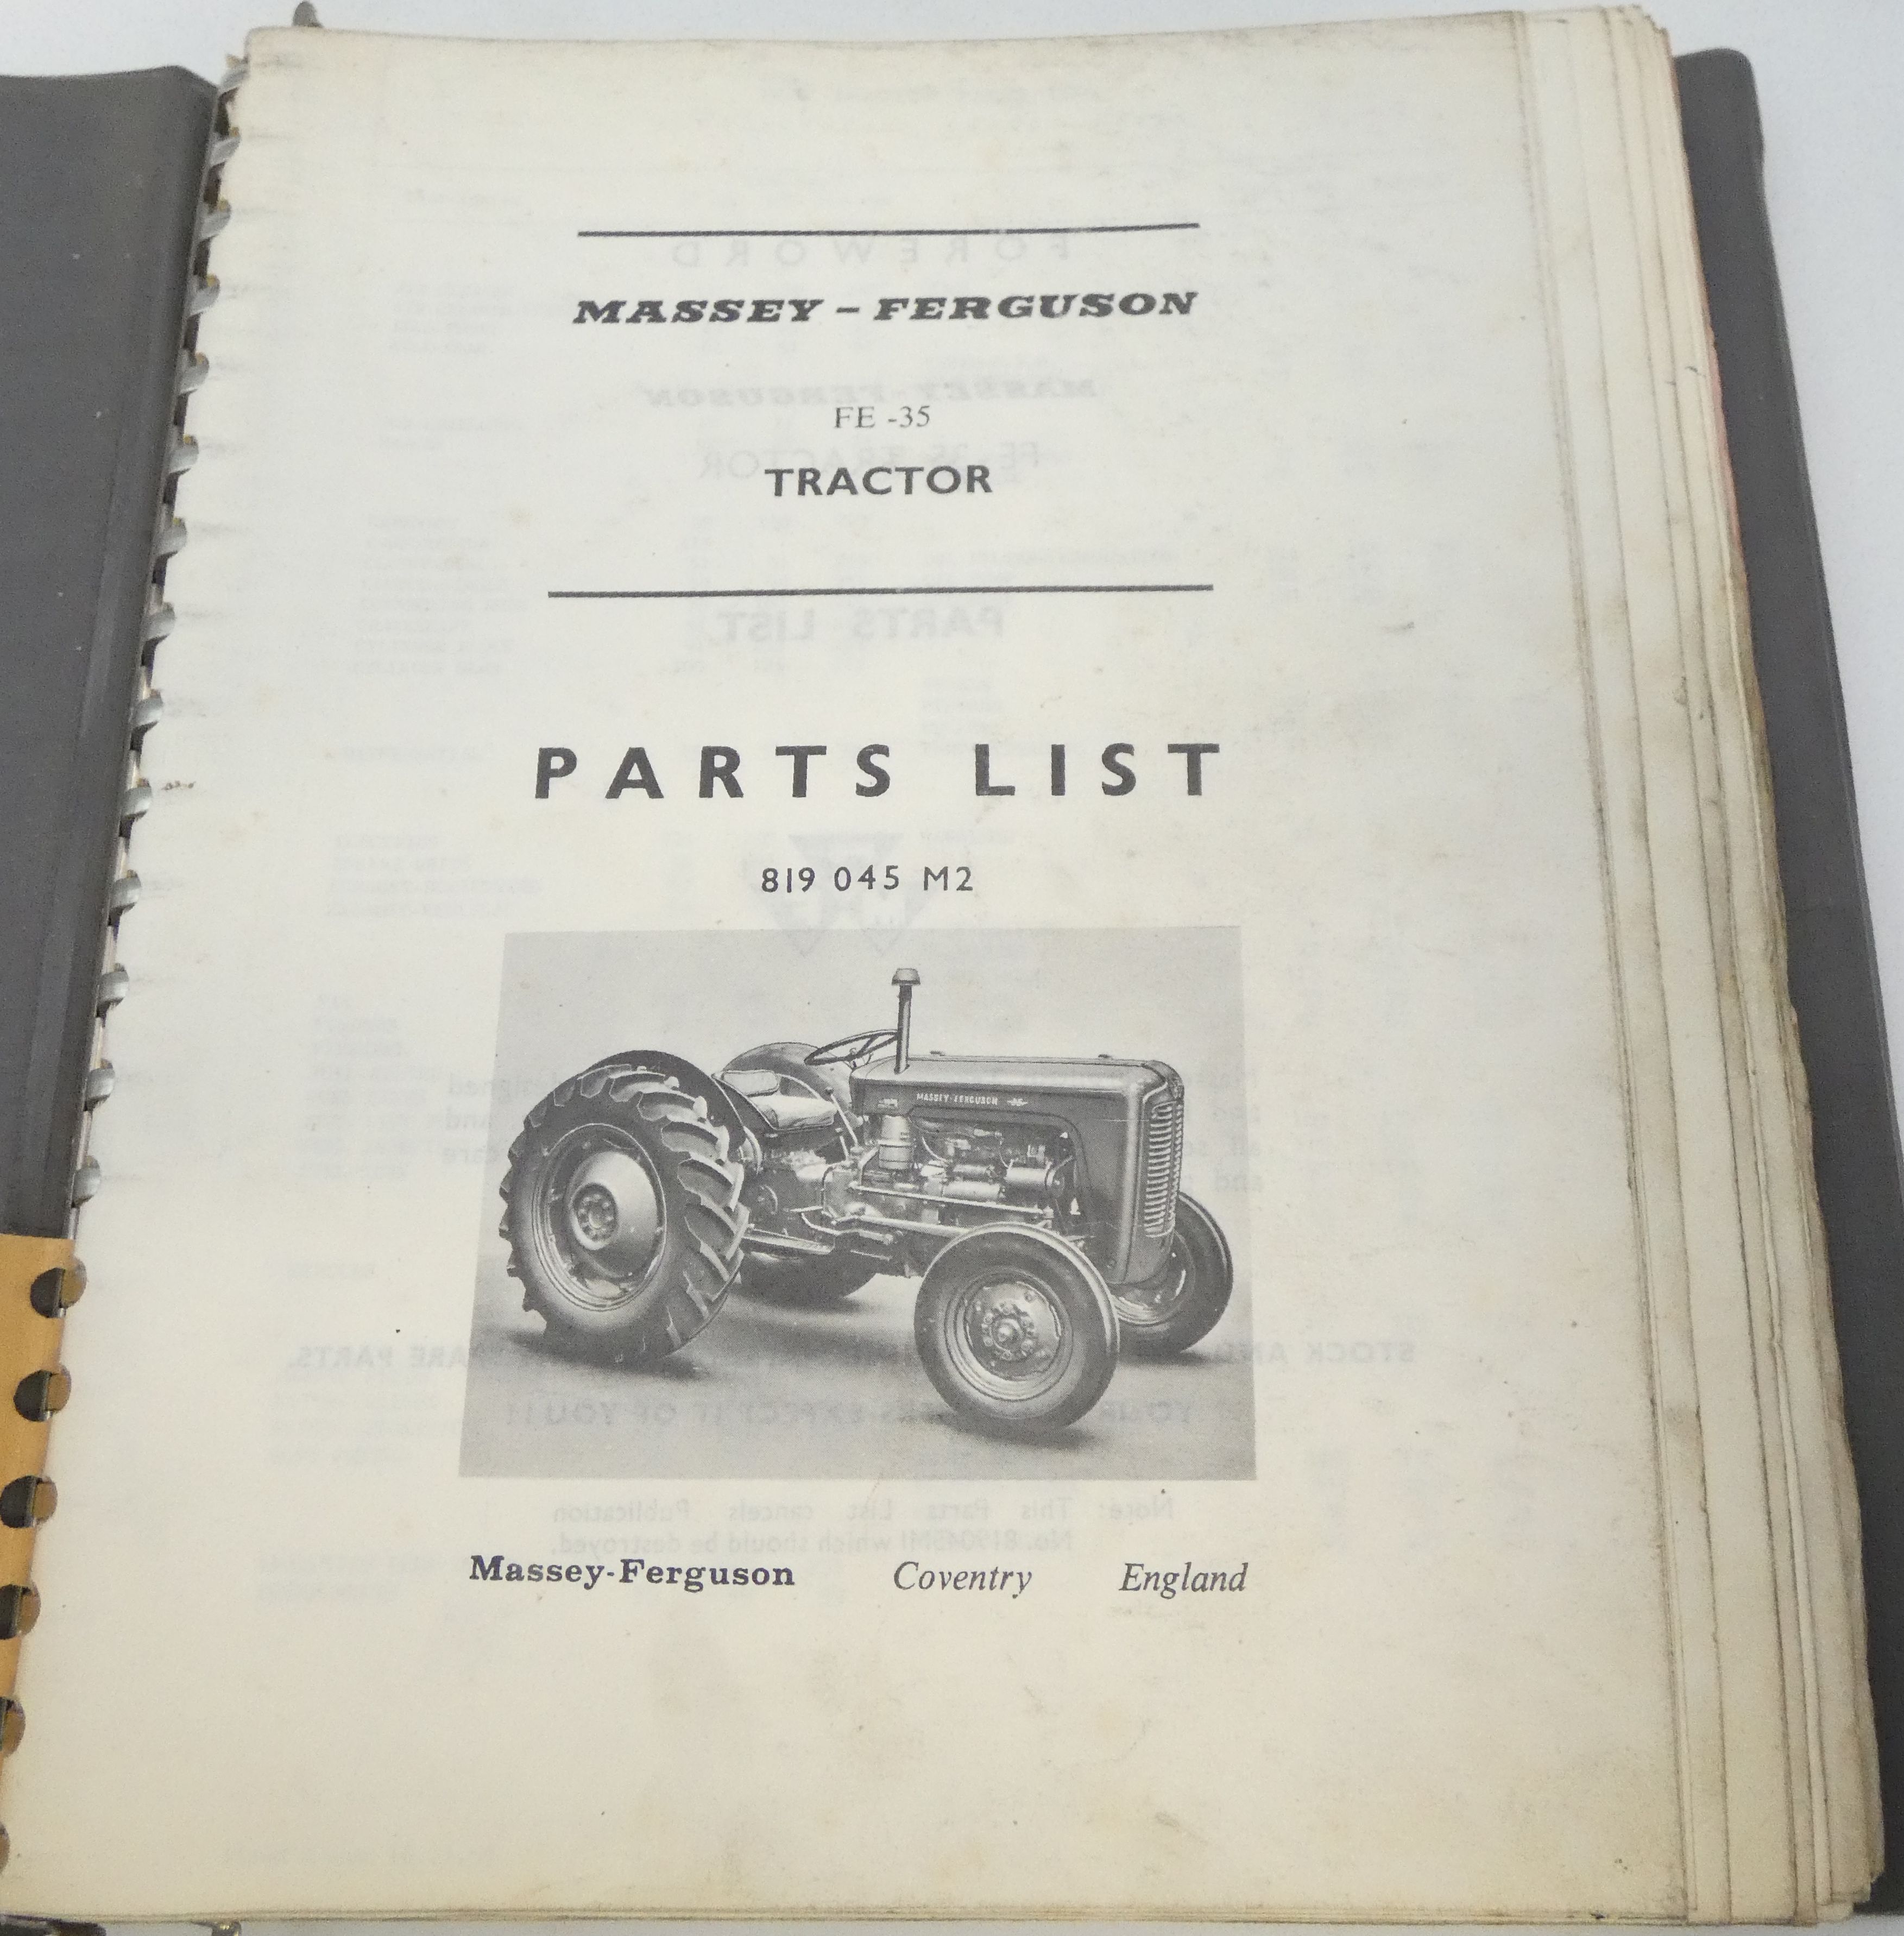 Massey-Ferguson FE-35 tractor parts list